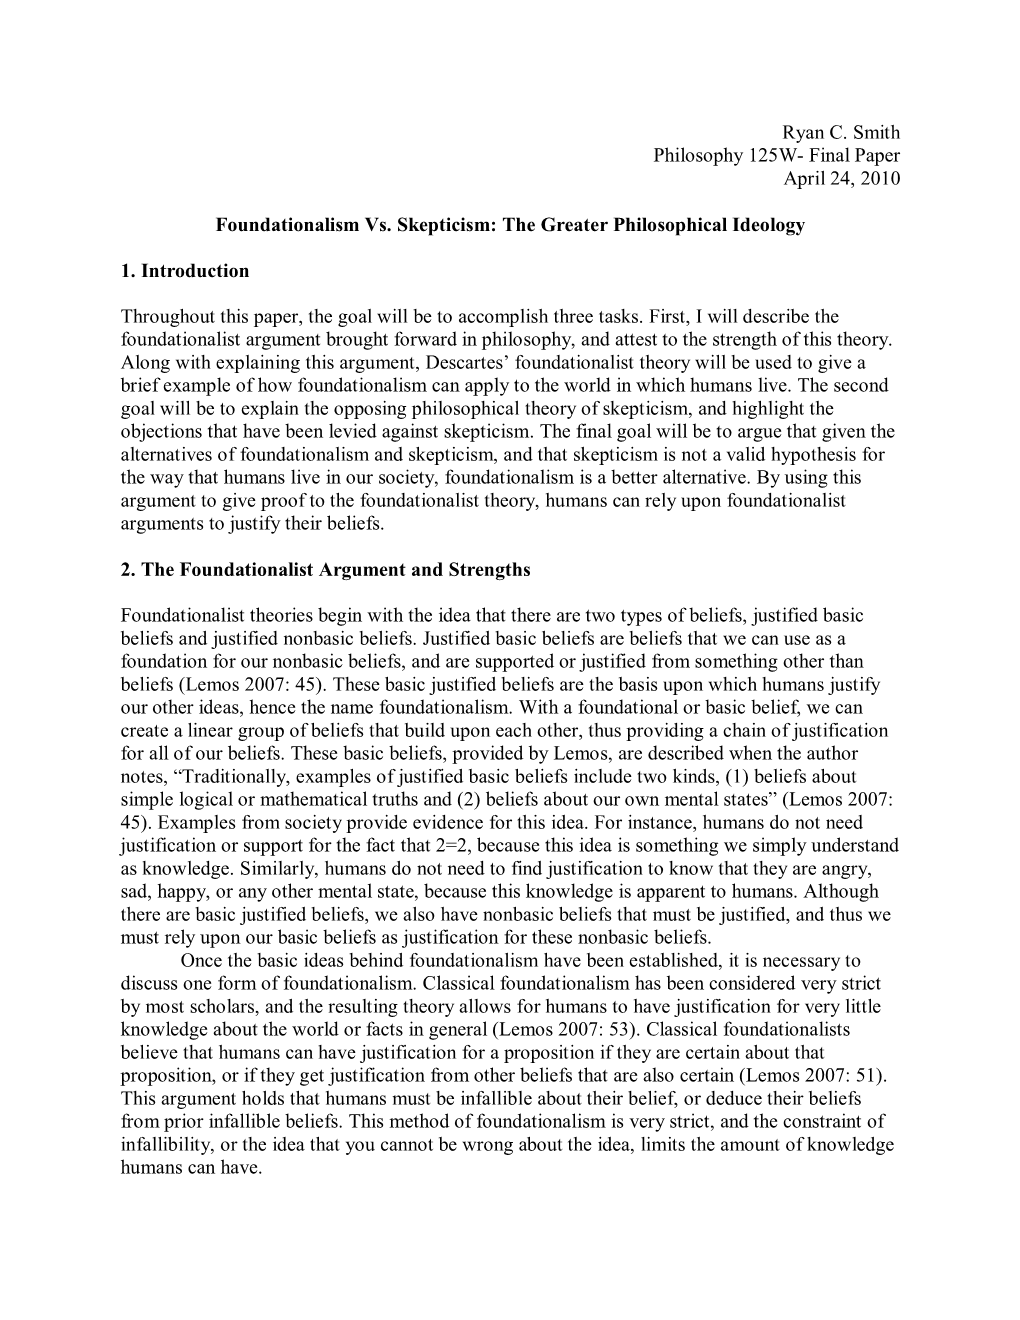 Ryan C. Smith Philosophy 125W- Final Paper April 24, 2010